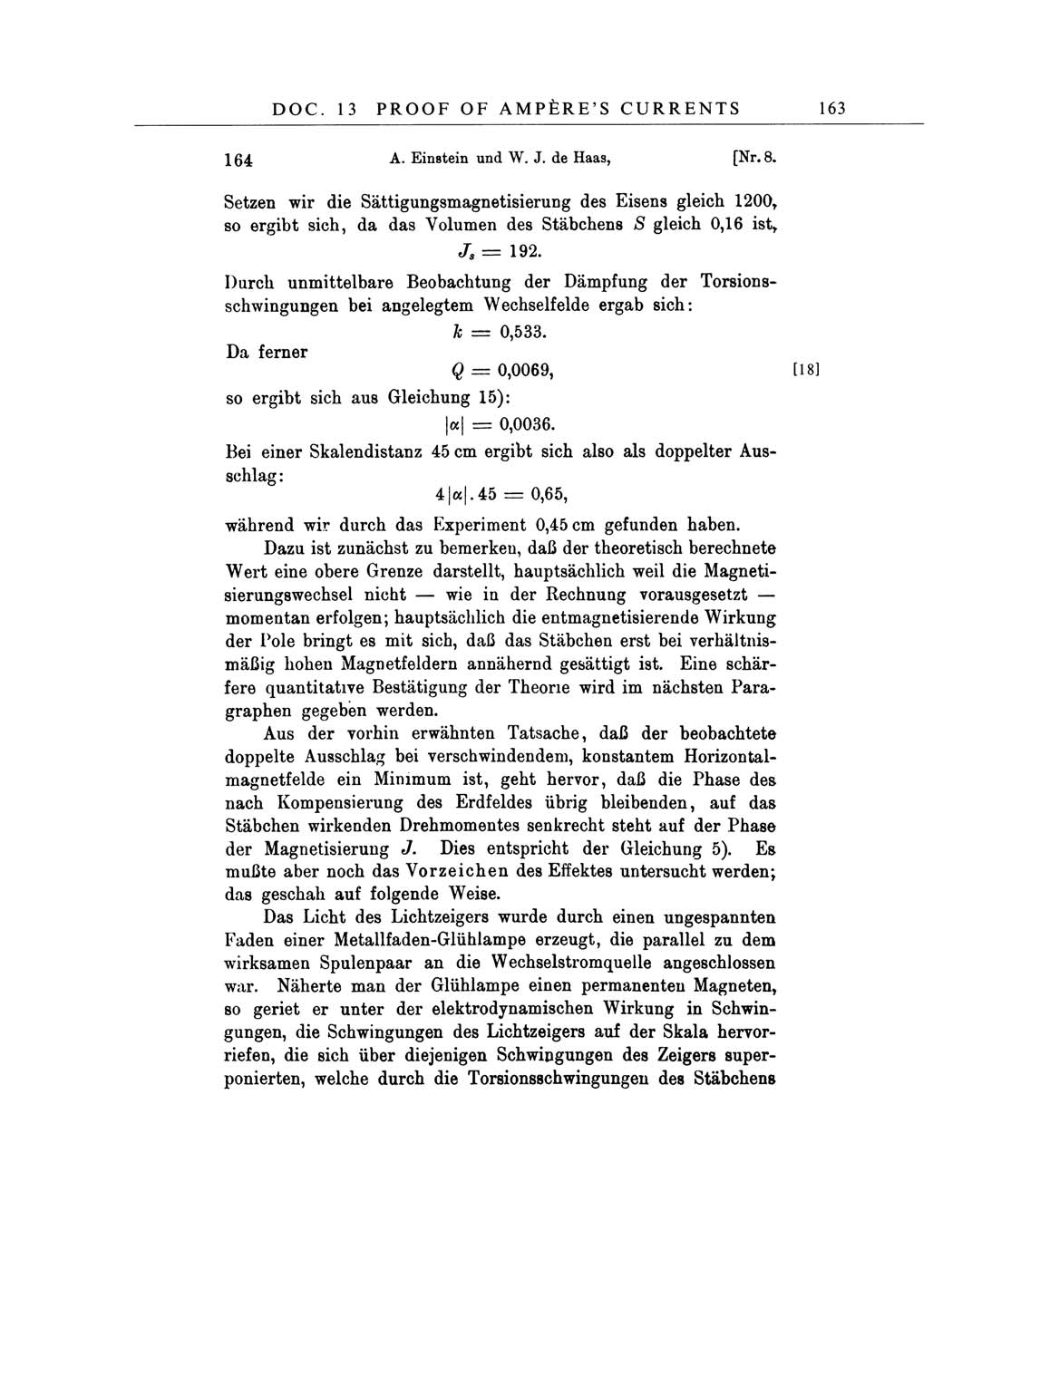 Volume 6: The Berlin Years: Writings, 1914-1917 page 163